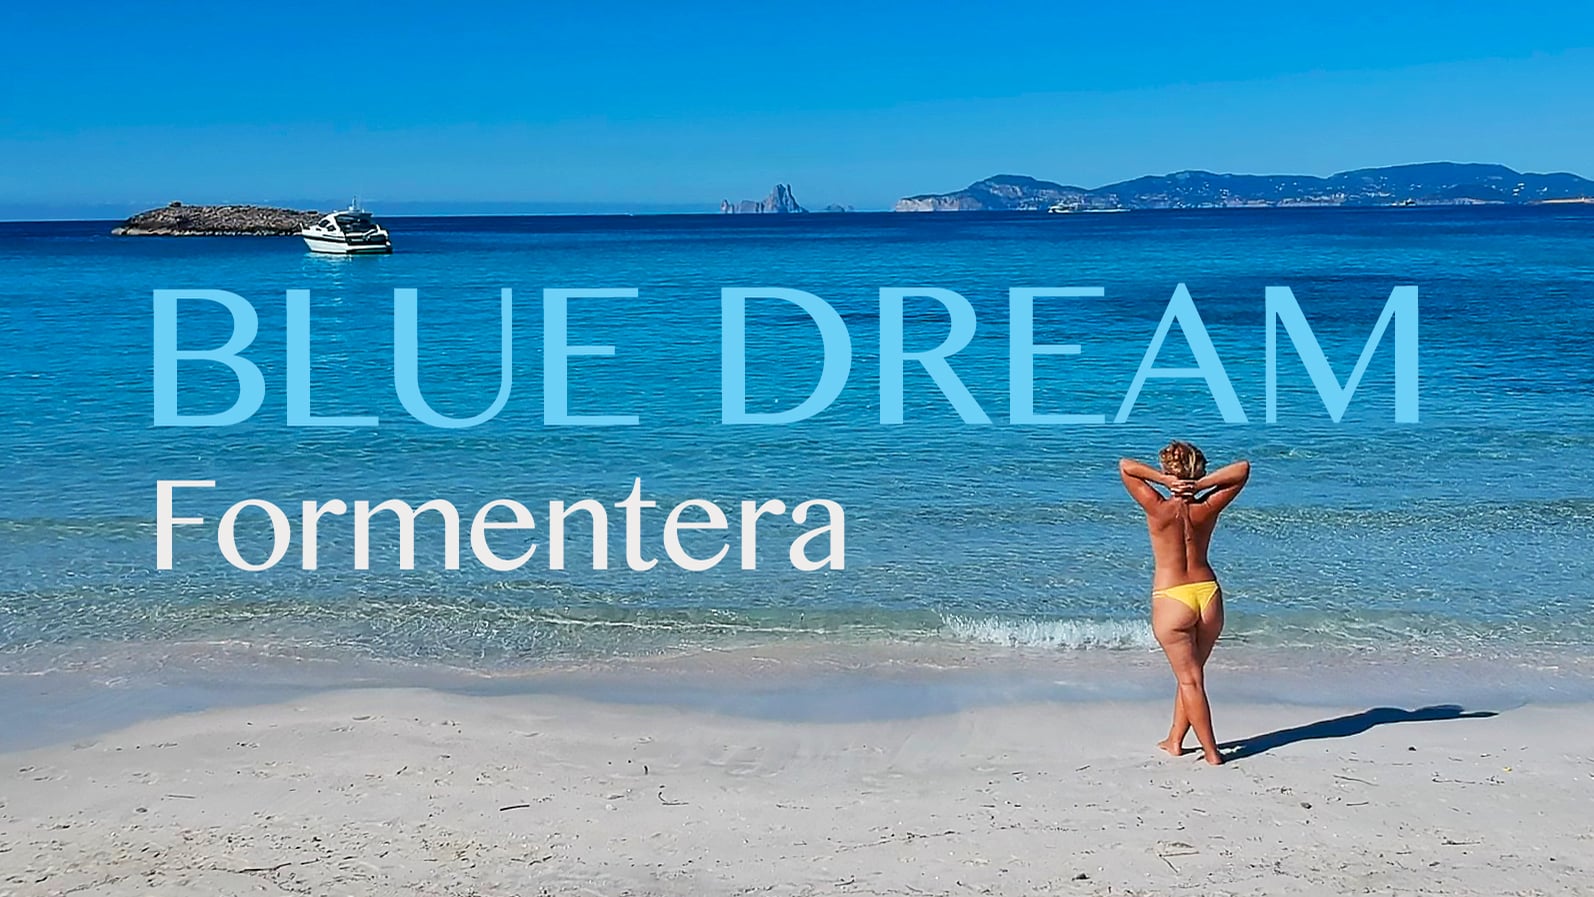 Watch Season 4 Ibiza, Formentera Online Vimeo On Demand on Vimeo